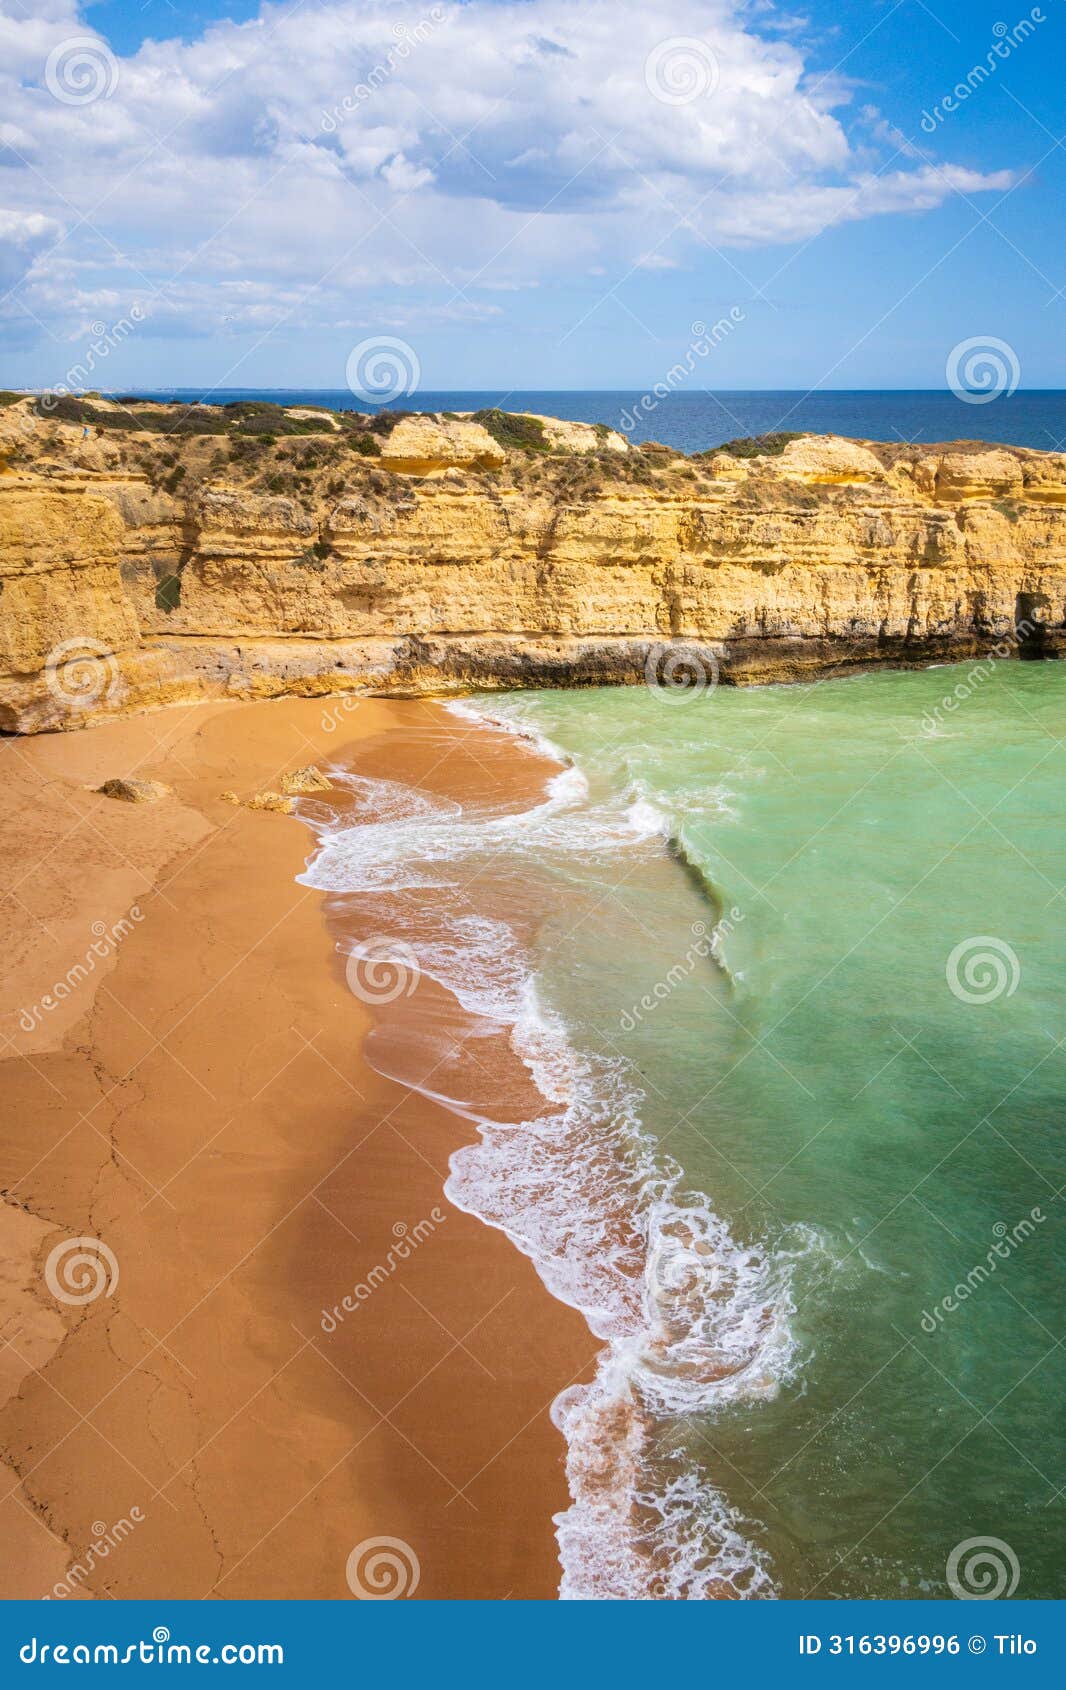 vertical view of cliffs and ocean waves crashing onto beach near albufeira, portugal